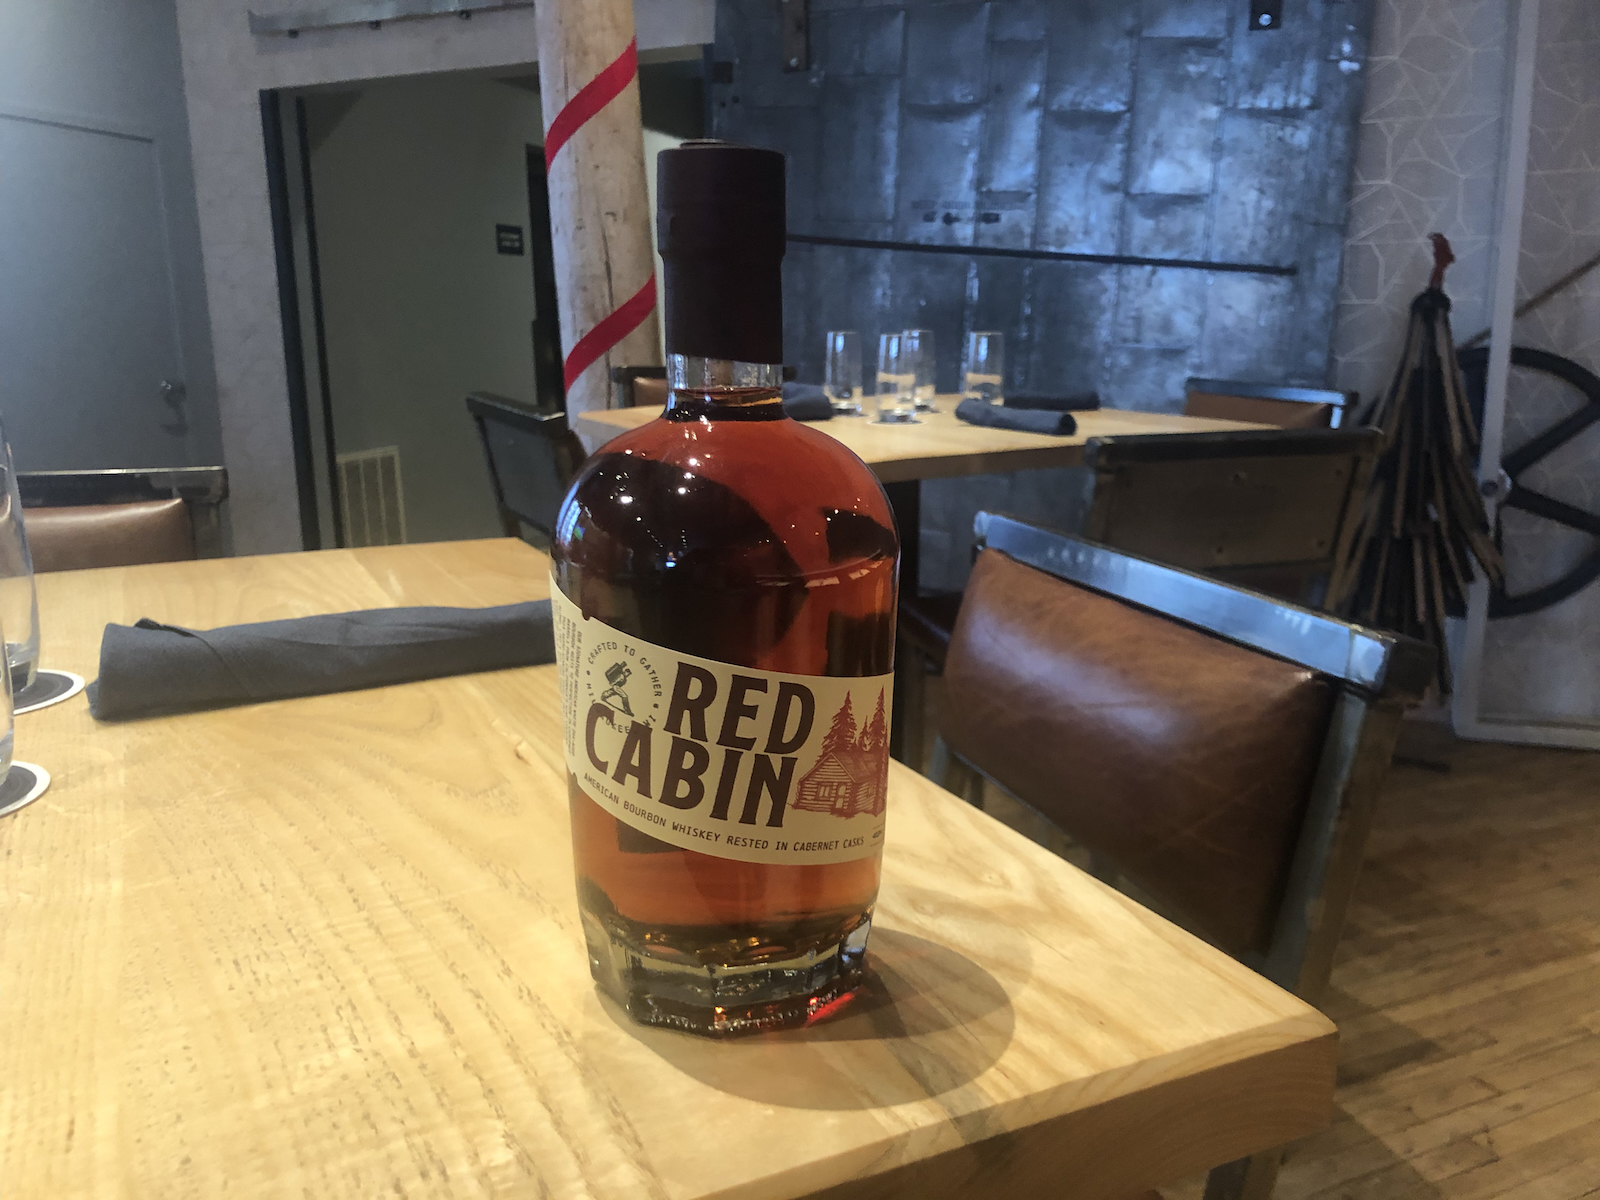 Red Cabin Bourbon